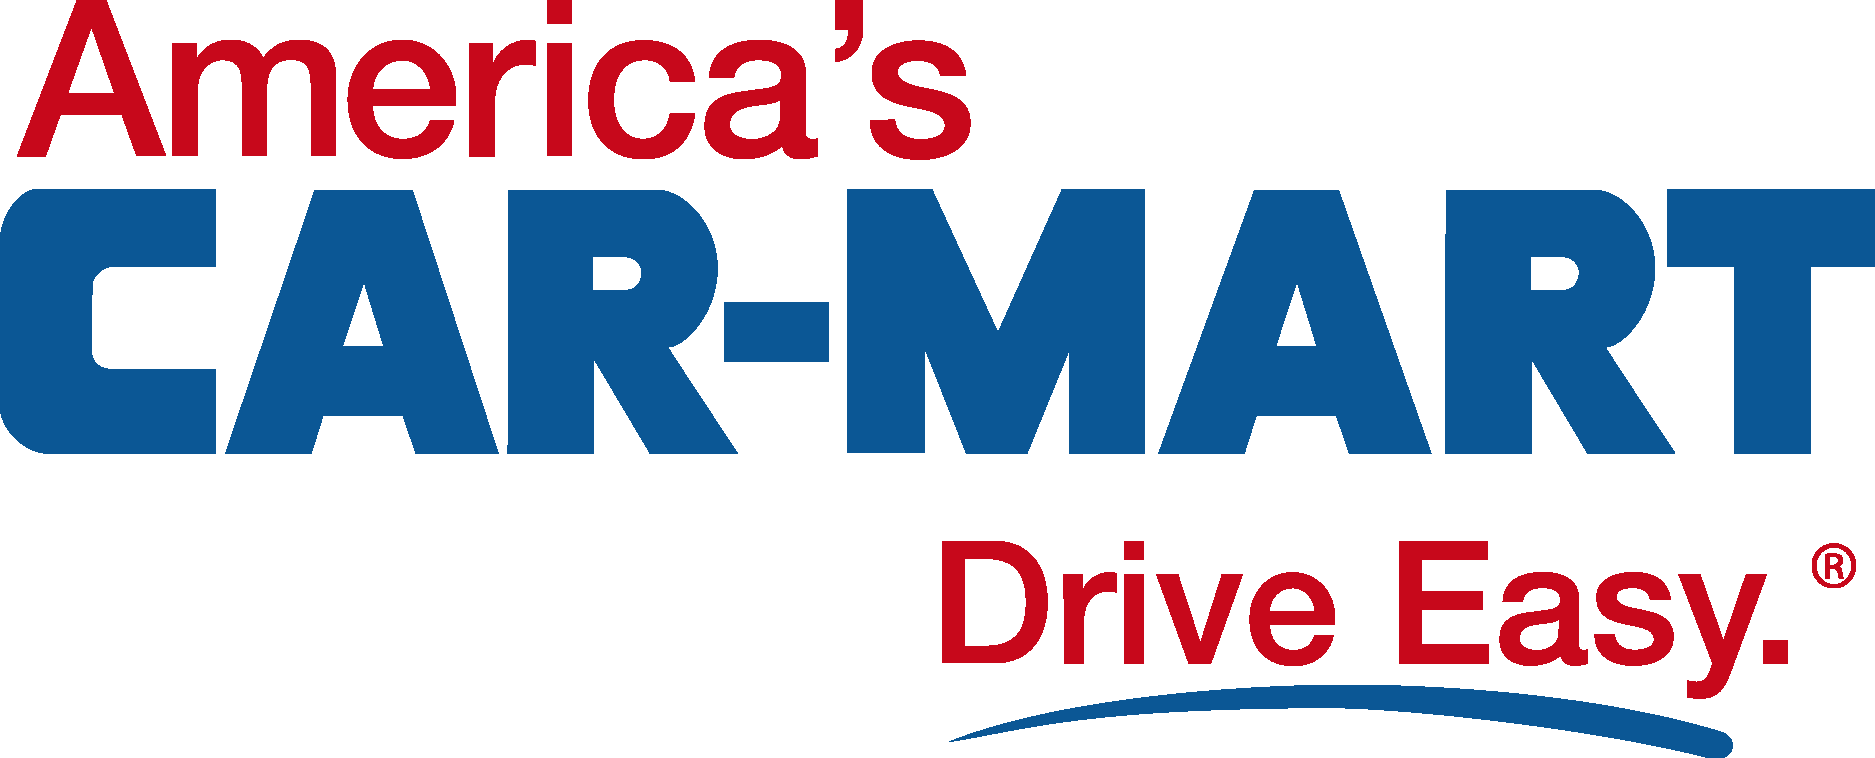 America’s Car Mart Logo Vector